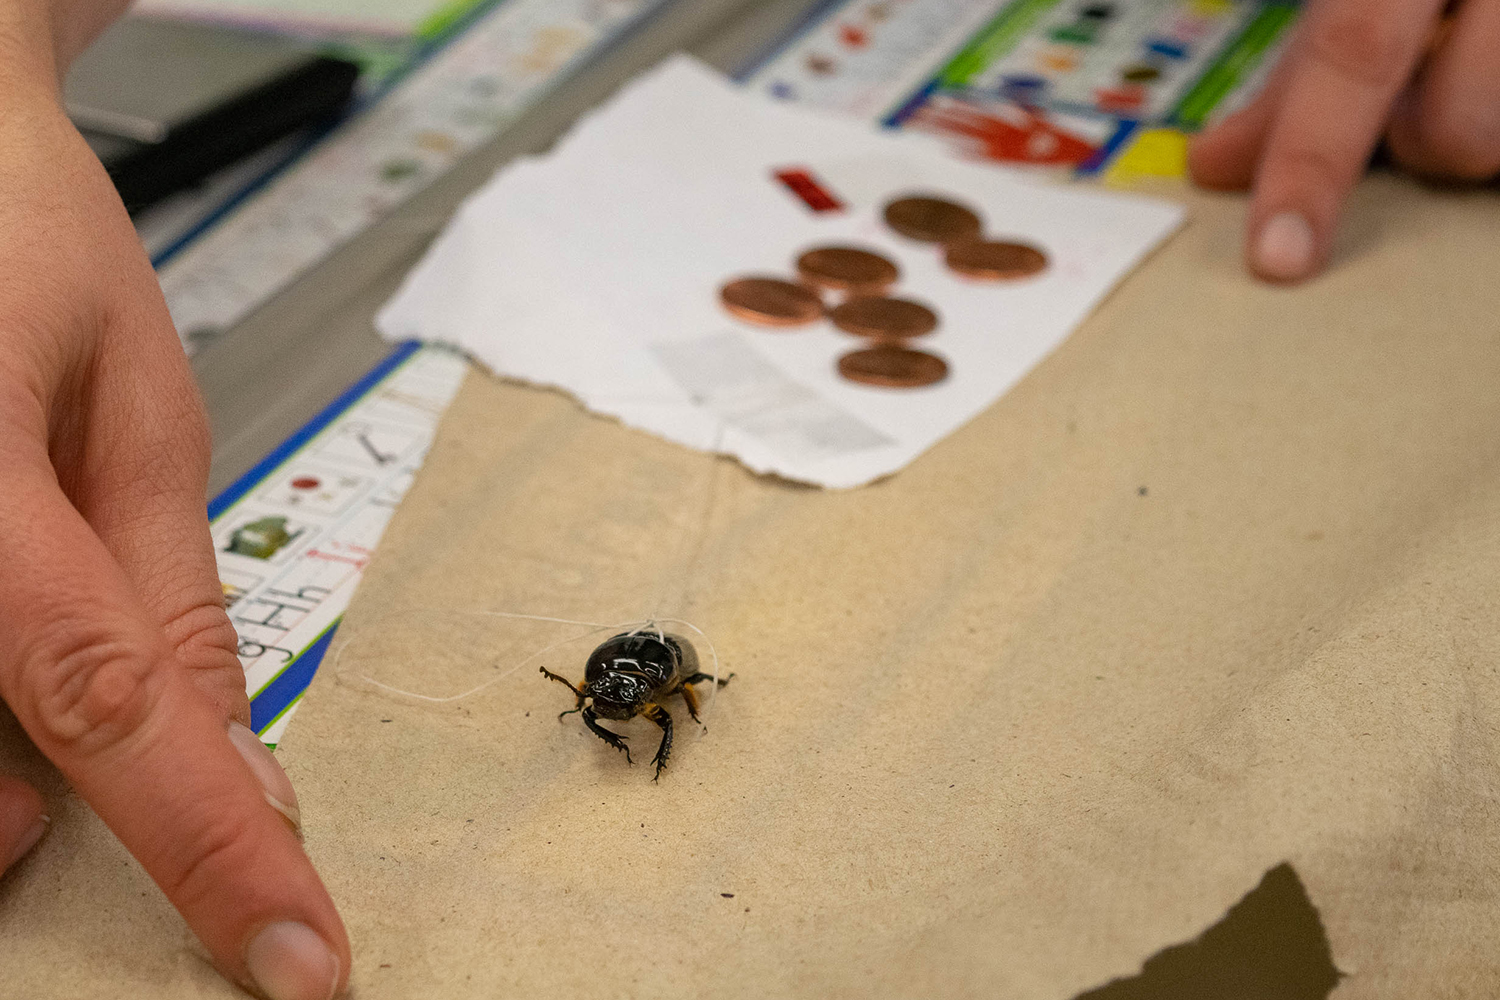 Beetle pulls pennies